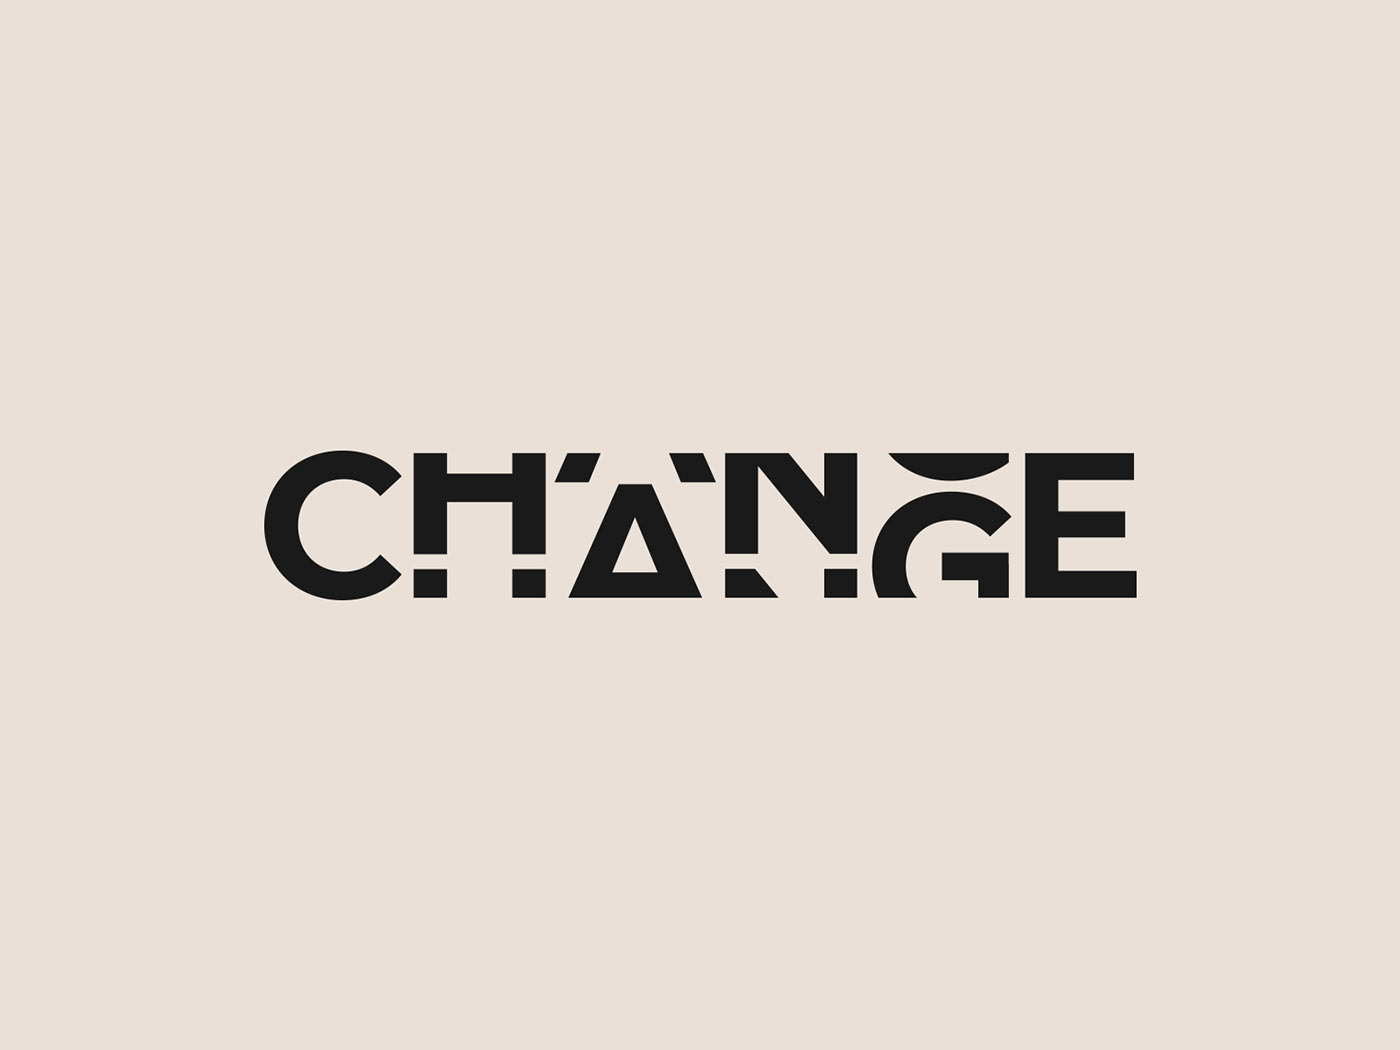 Change Logo And Identity Design For Interior Studio On Behance